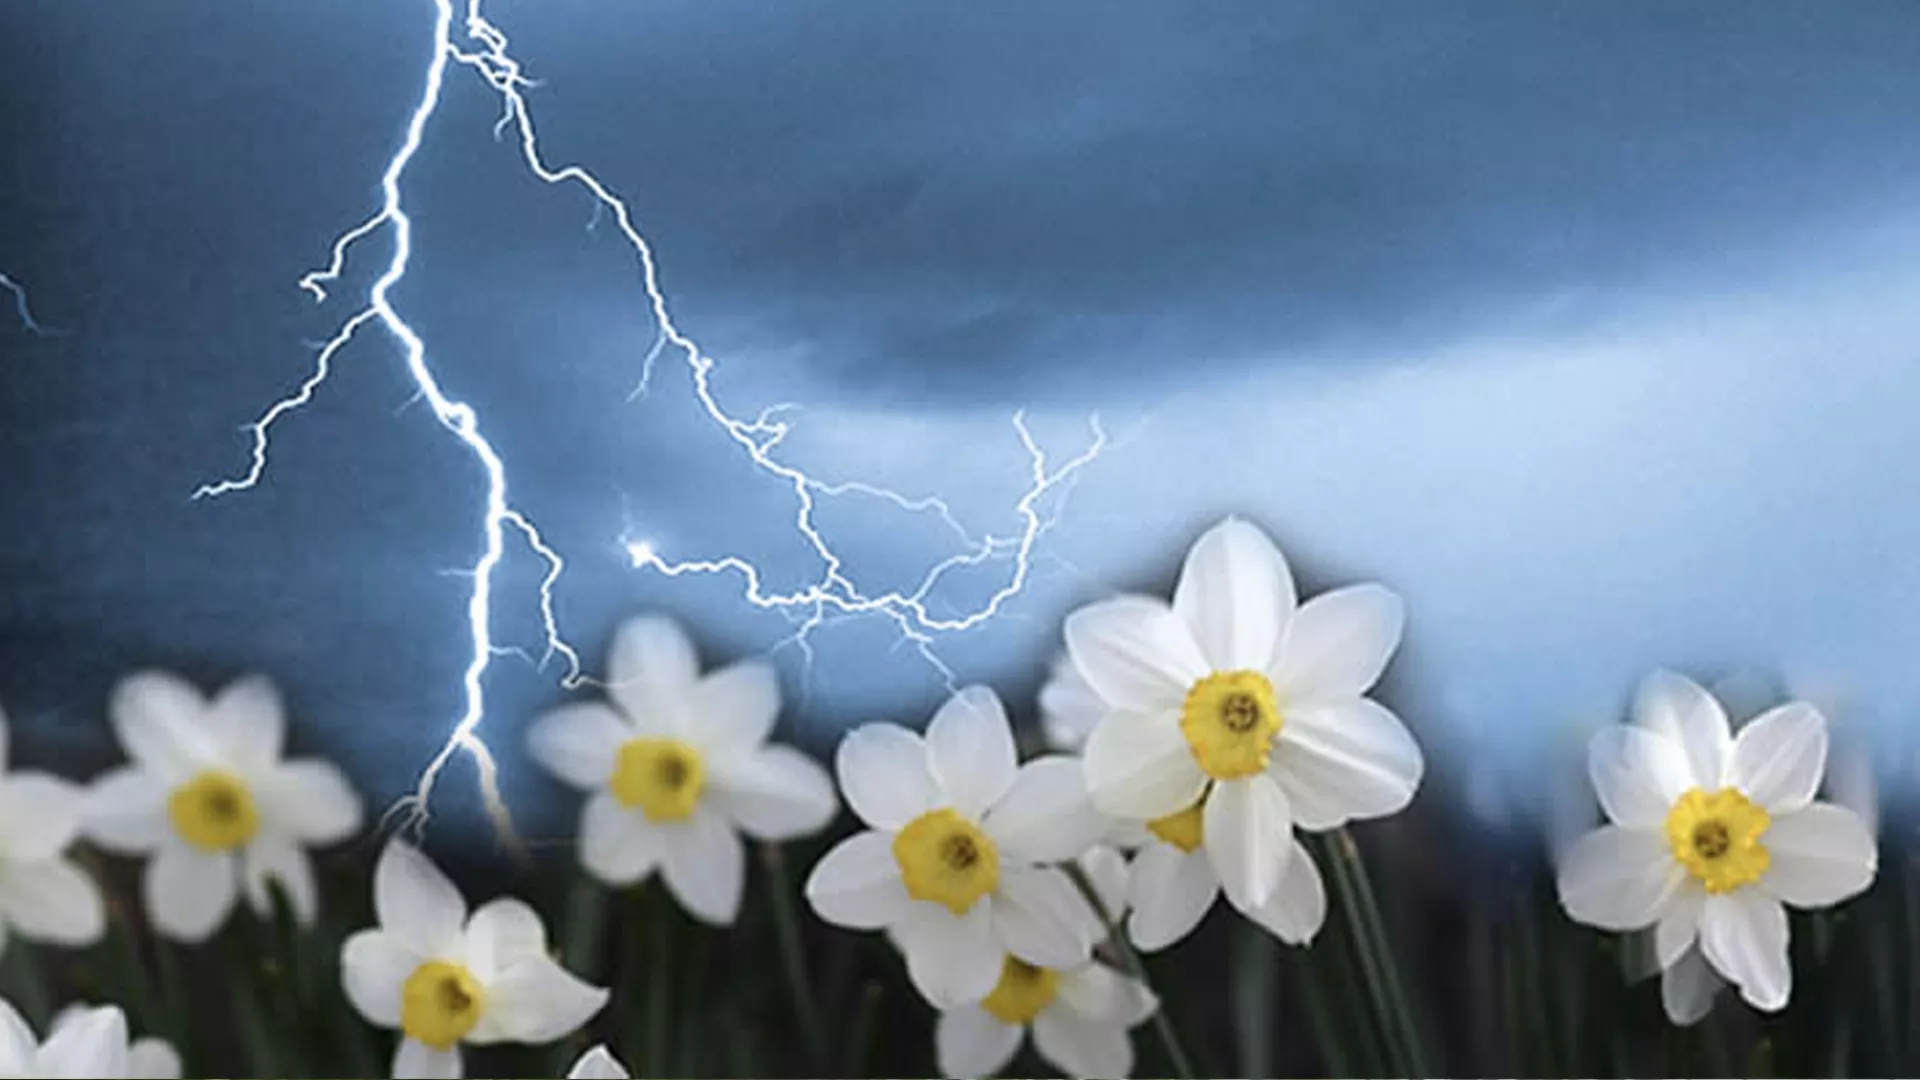 Image of lightening and flowers